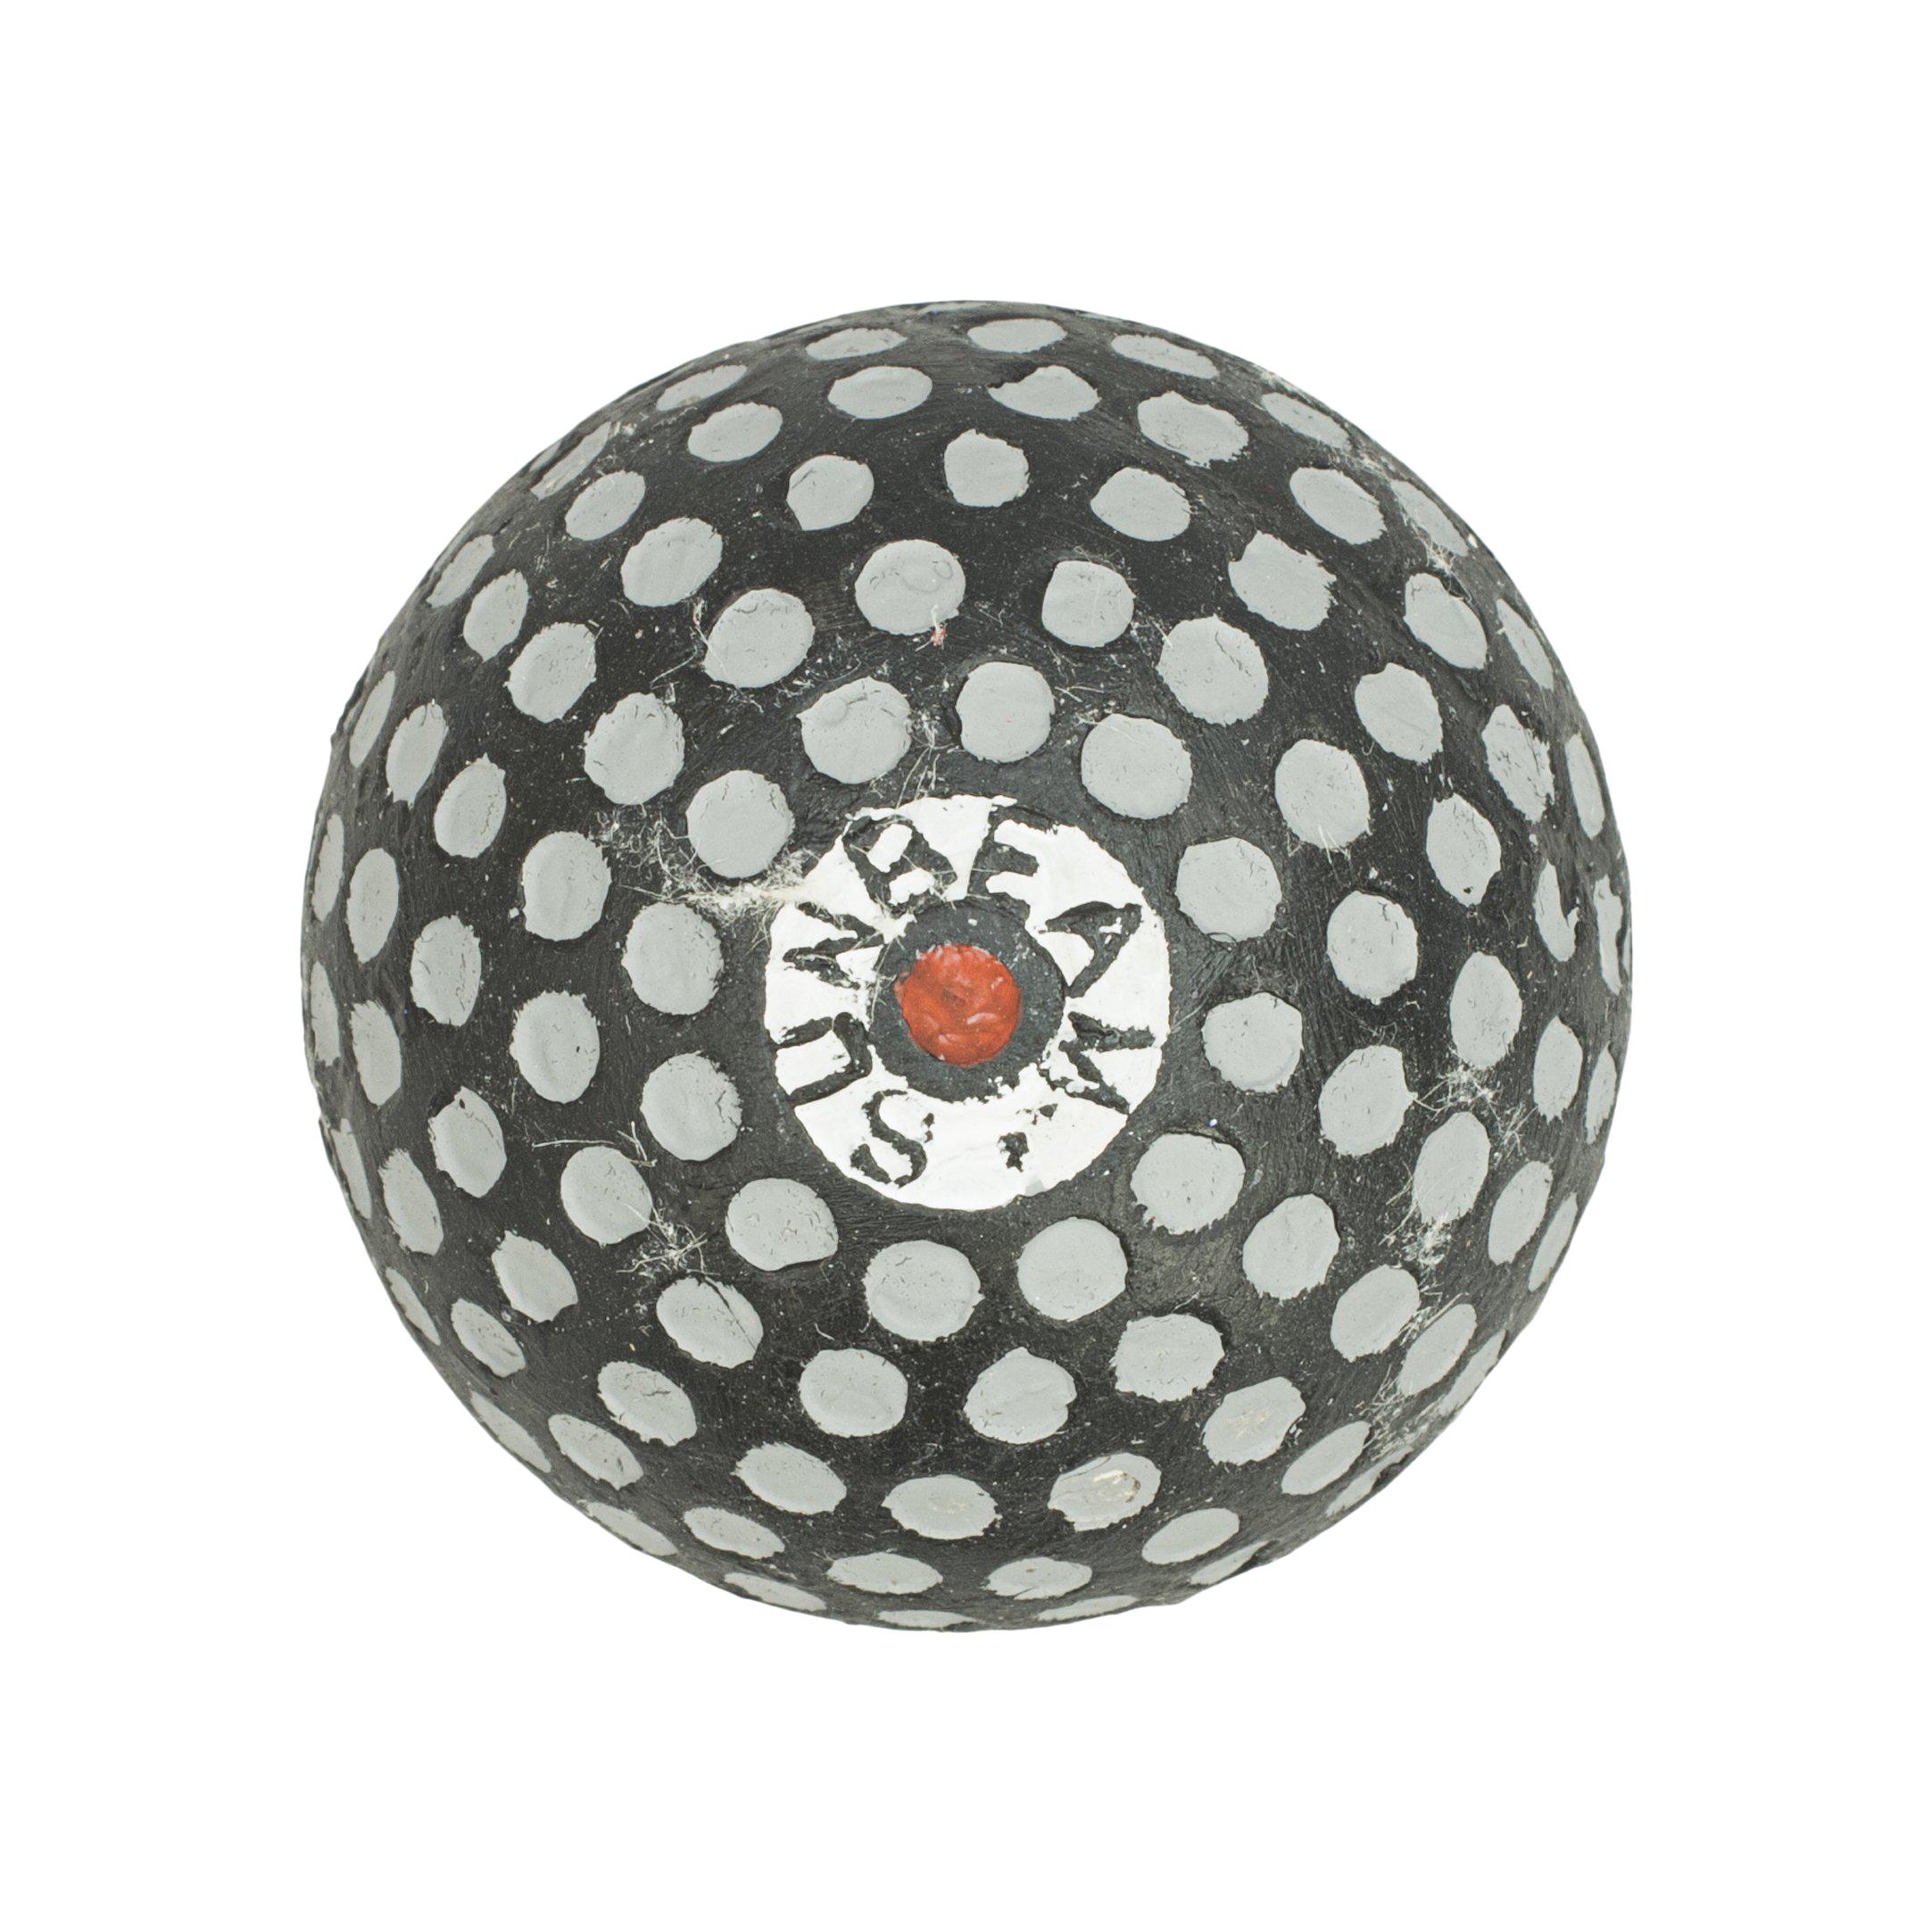 Unusual Mesh Pattern Golf Ball 'Durable', 1920s